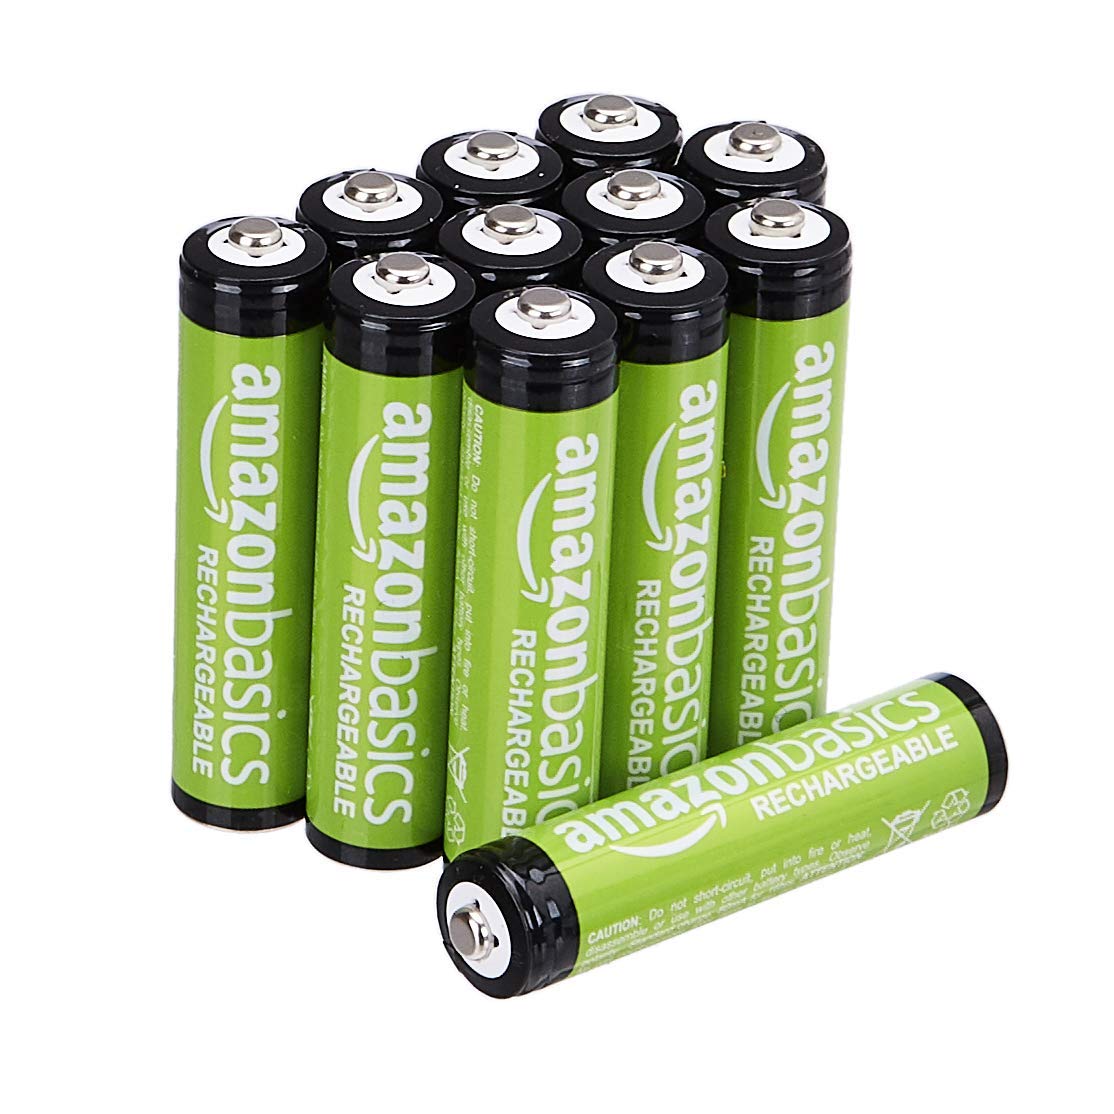 Amazon Basics 12-Pack AAA 800 mAh Rechargeable Batteries - $9.82